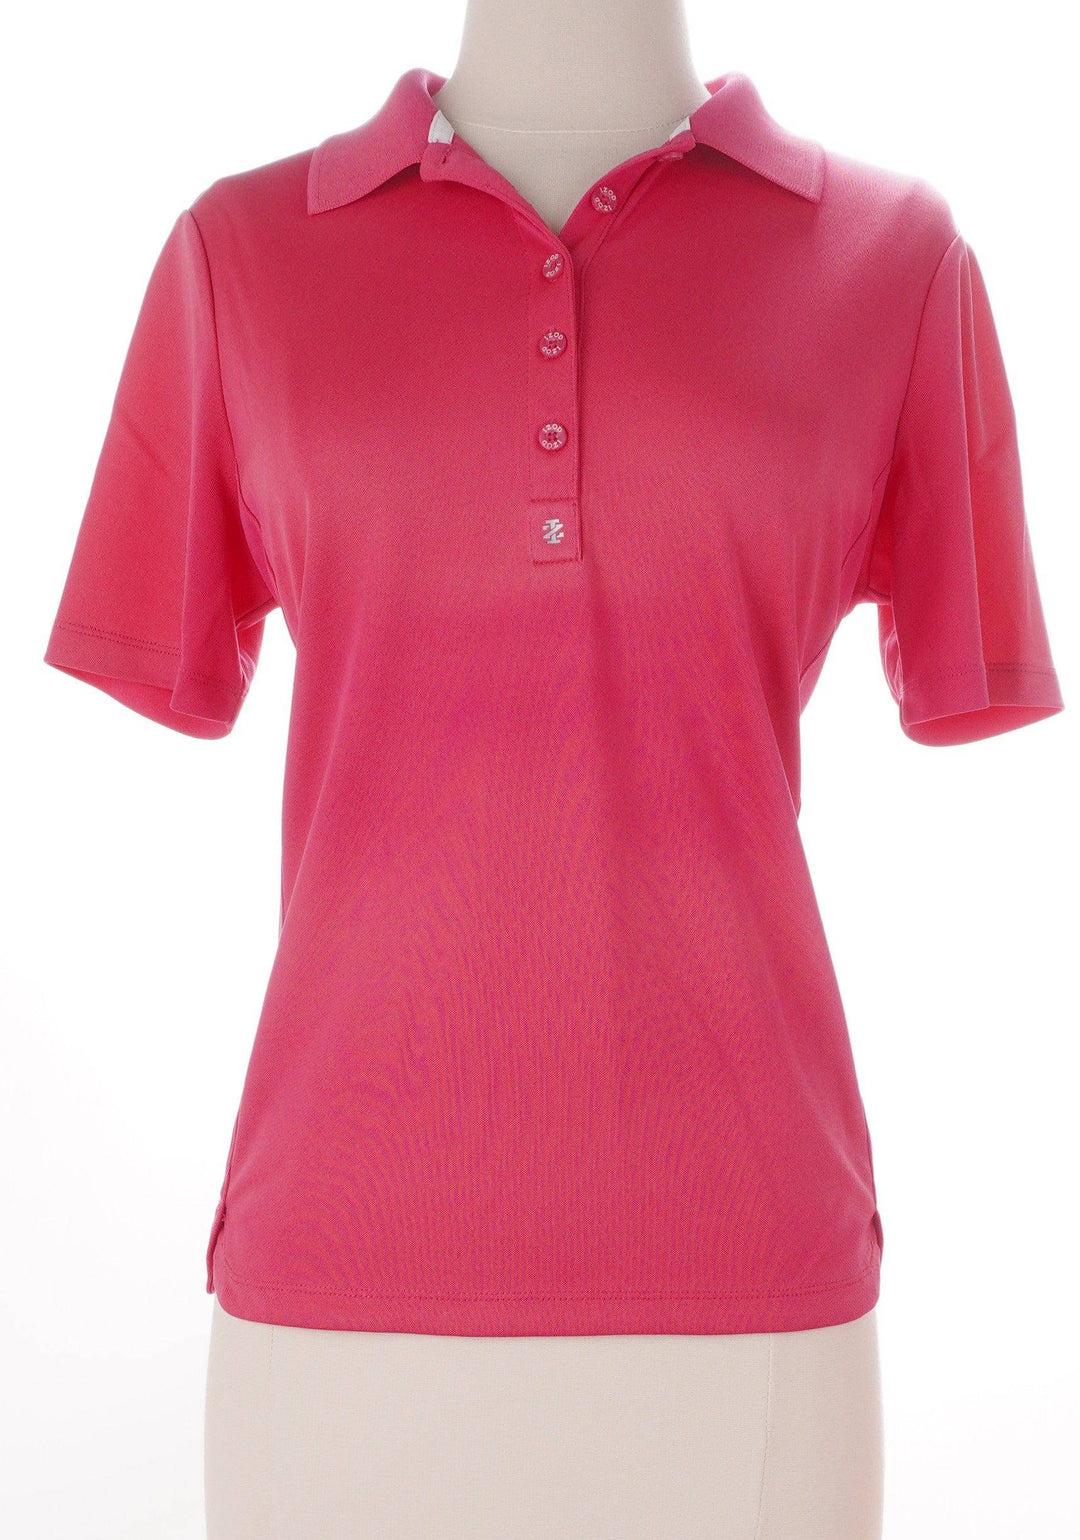 Izod Golf Hot Pink / Medium / Consigned Izod Golf Short Sleeve Top - Hot Pink - Size Medium